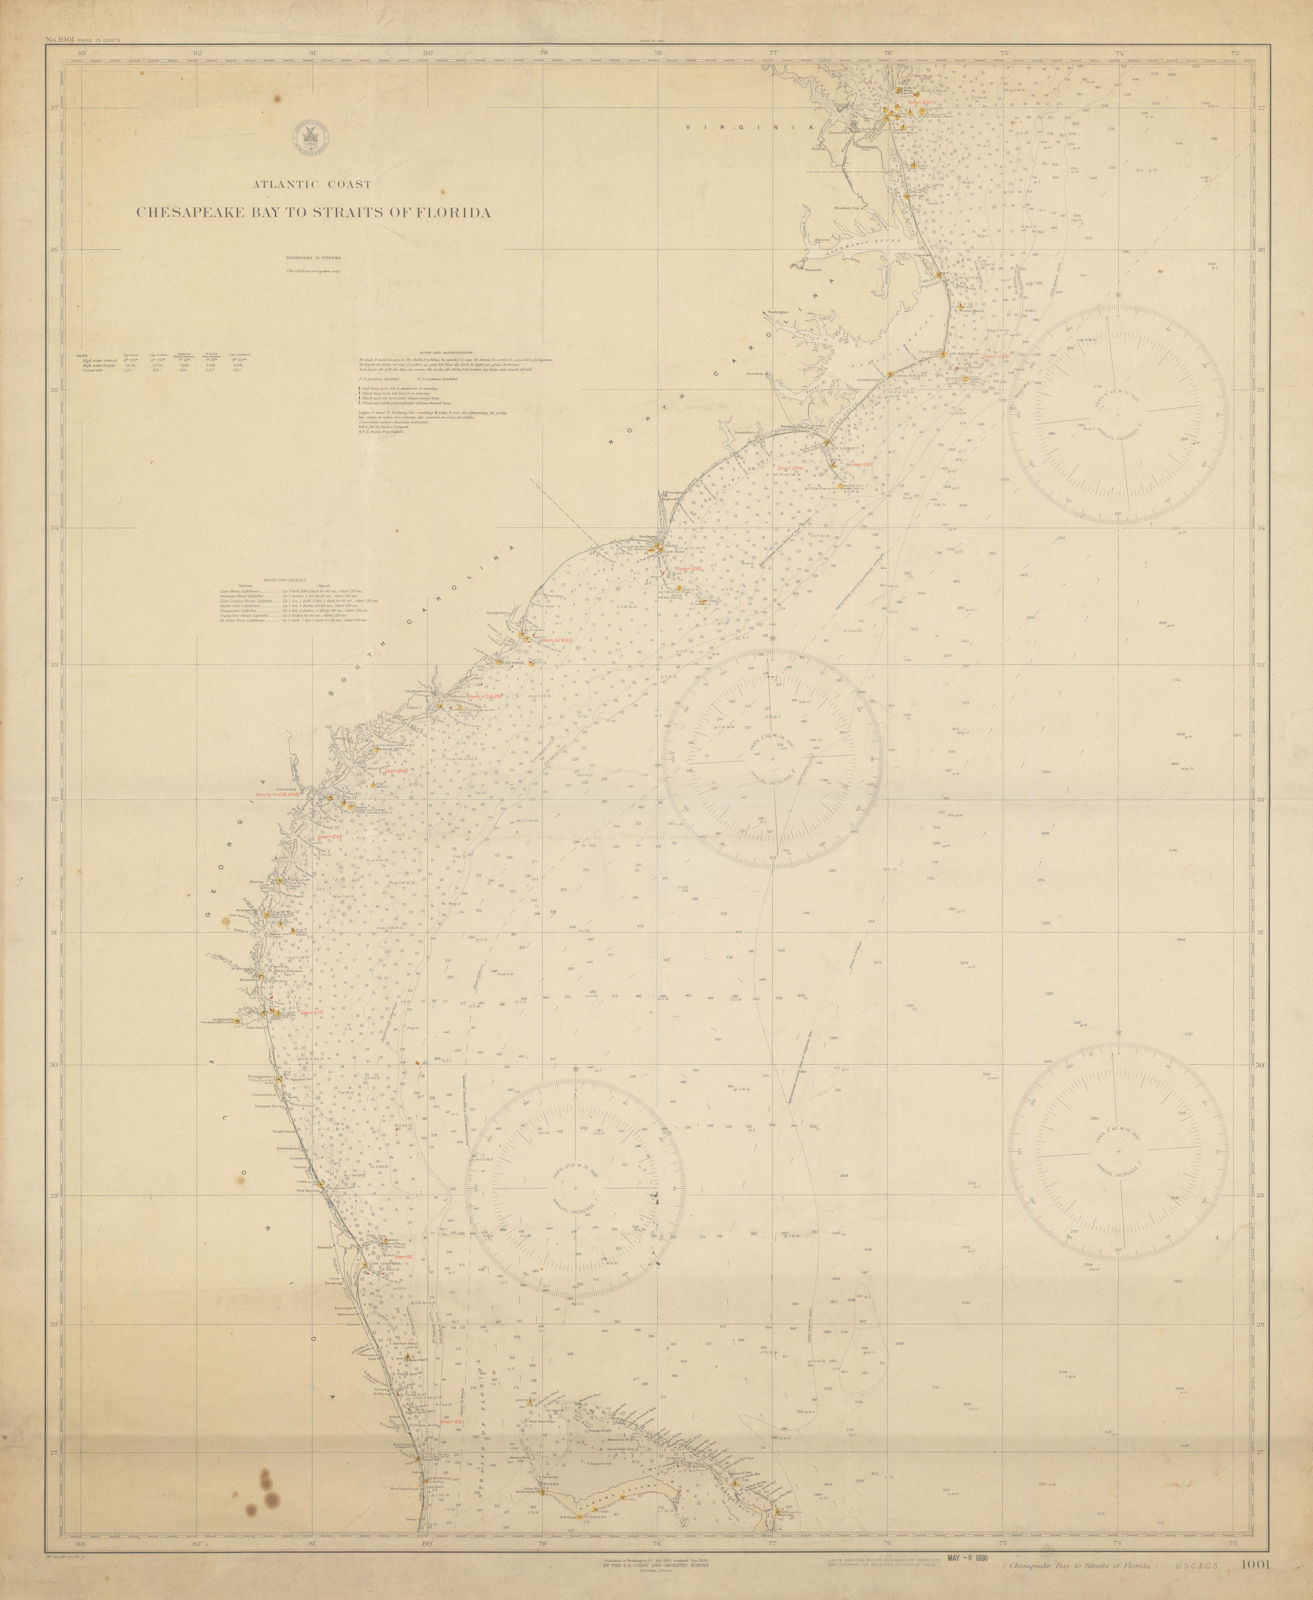 Associate Product USA Atlantic Coast Chesapeake Bay-Florida Strait USCGS sea chart 1928 (1930) map